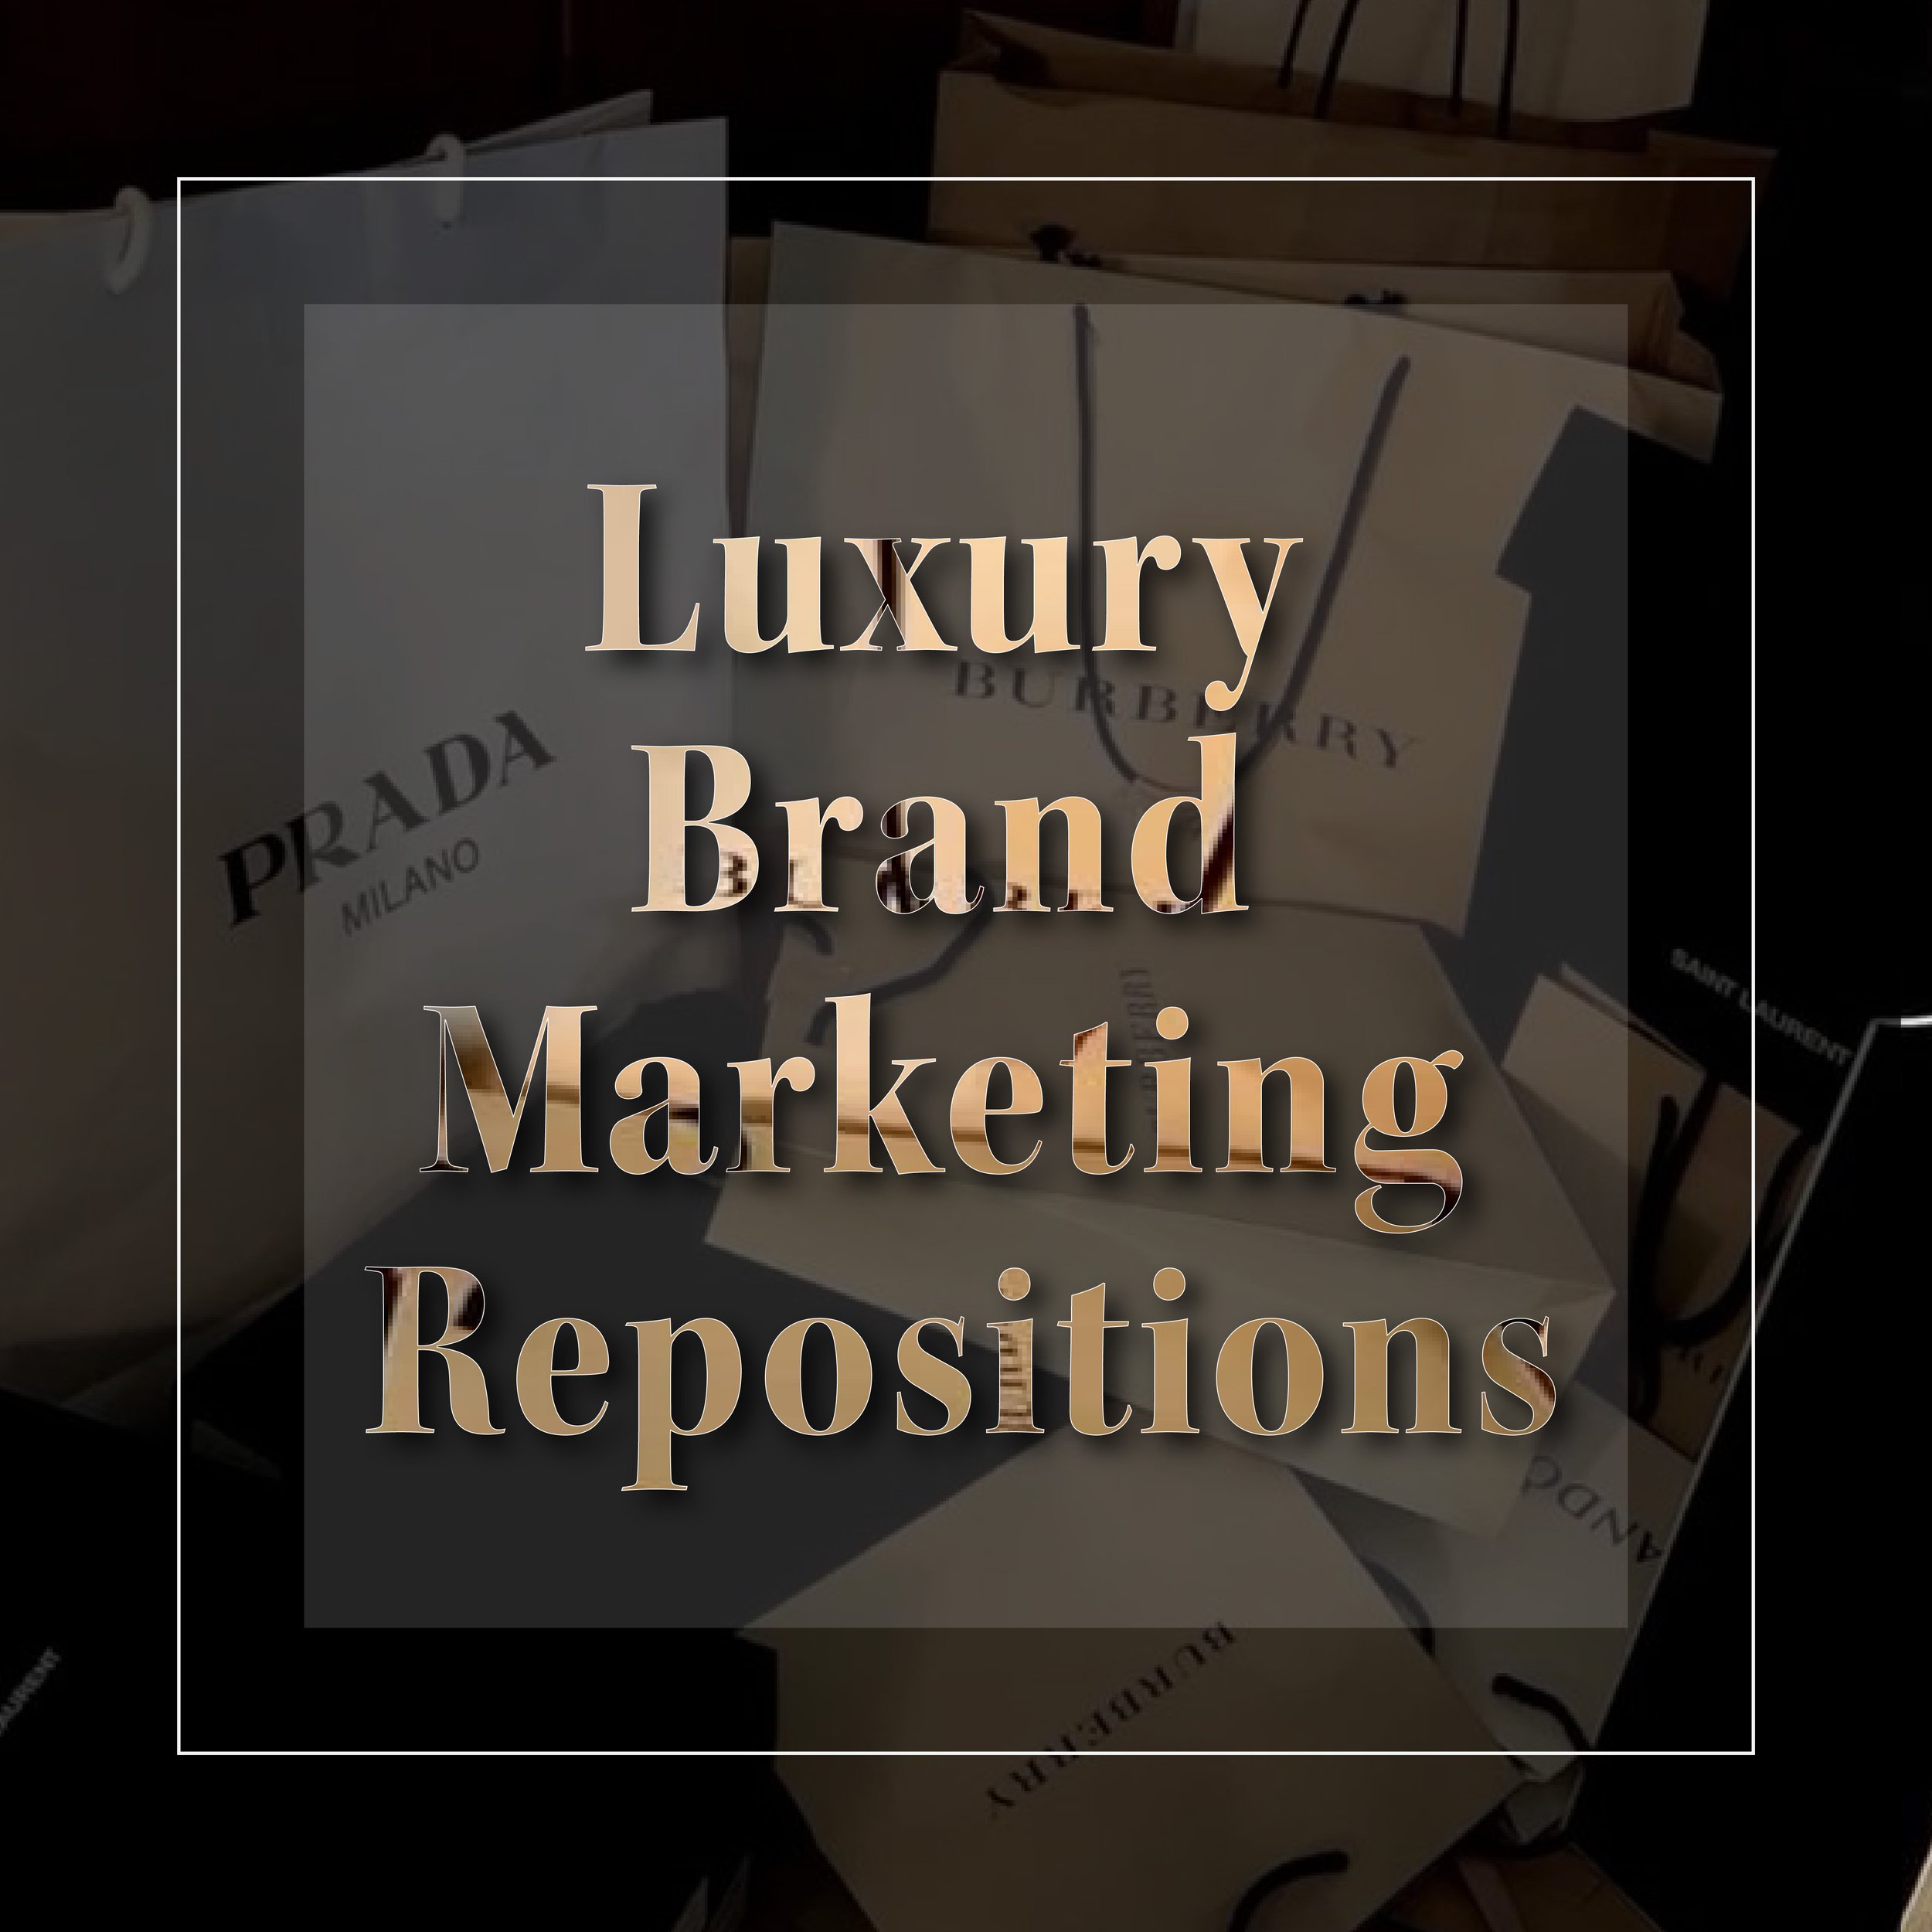 Louis Vuitton: Promotion Strategy